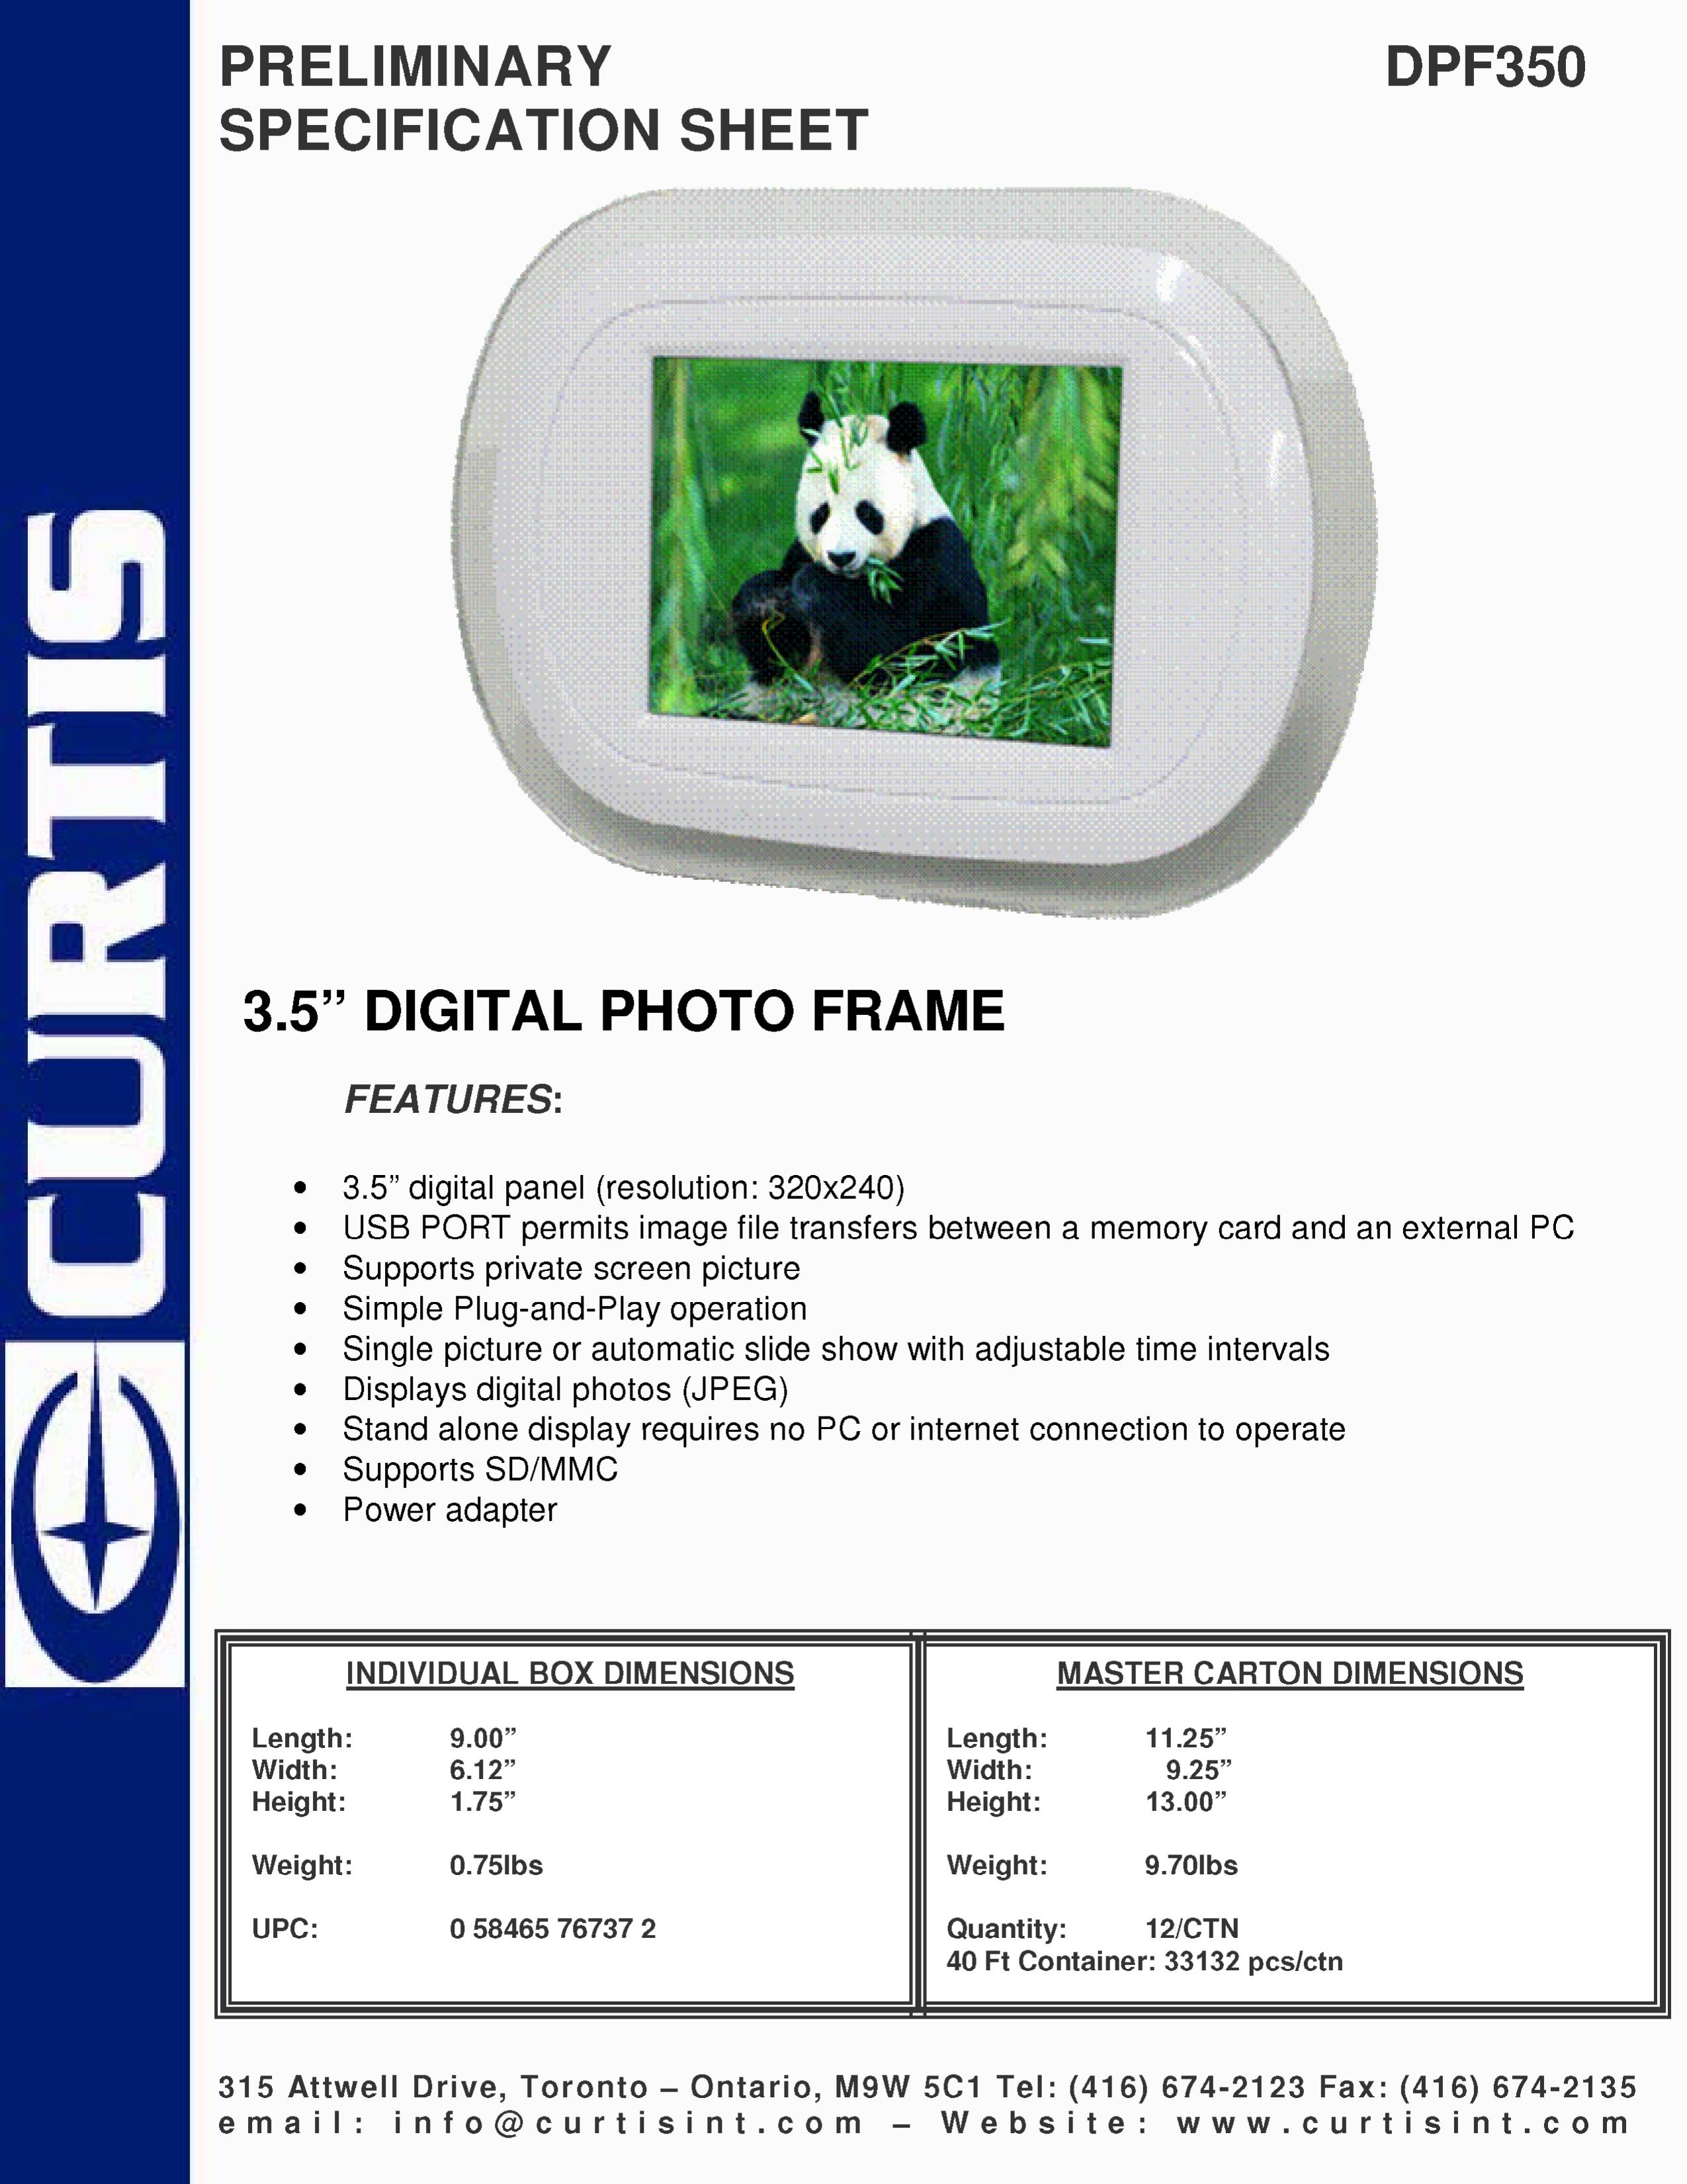 Curtis DPF350 Digital Photo Frame User Manual